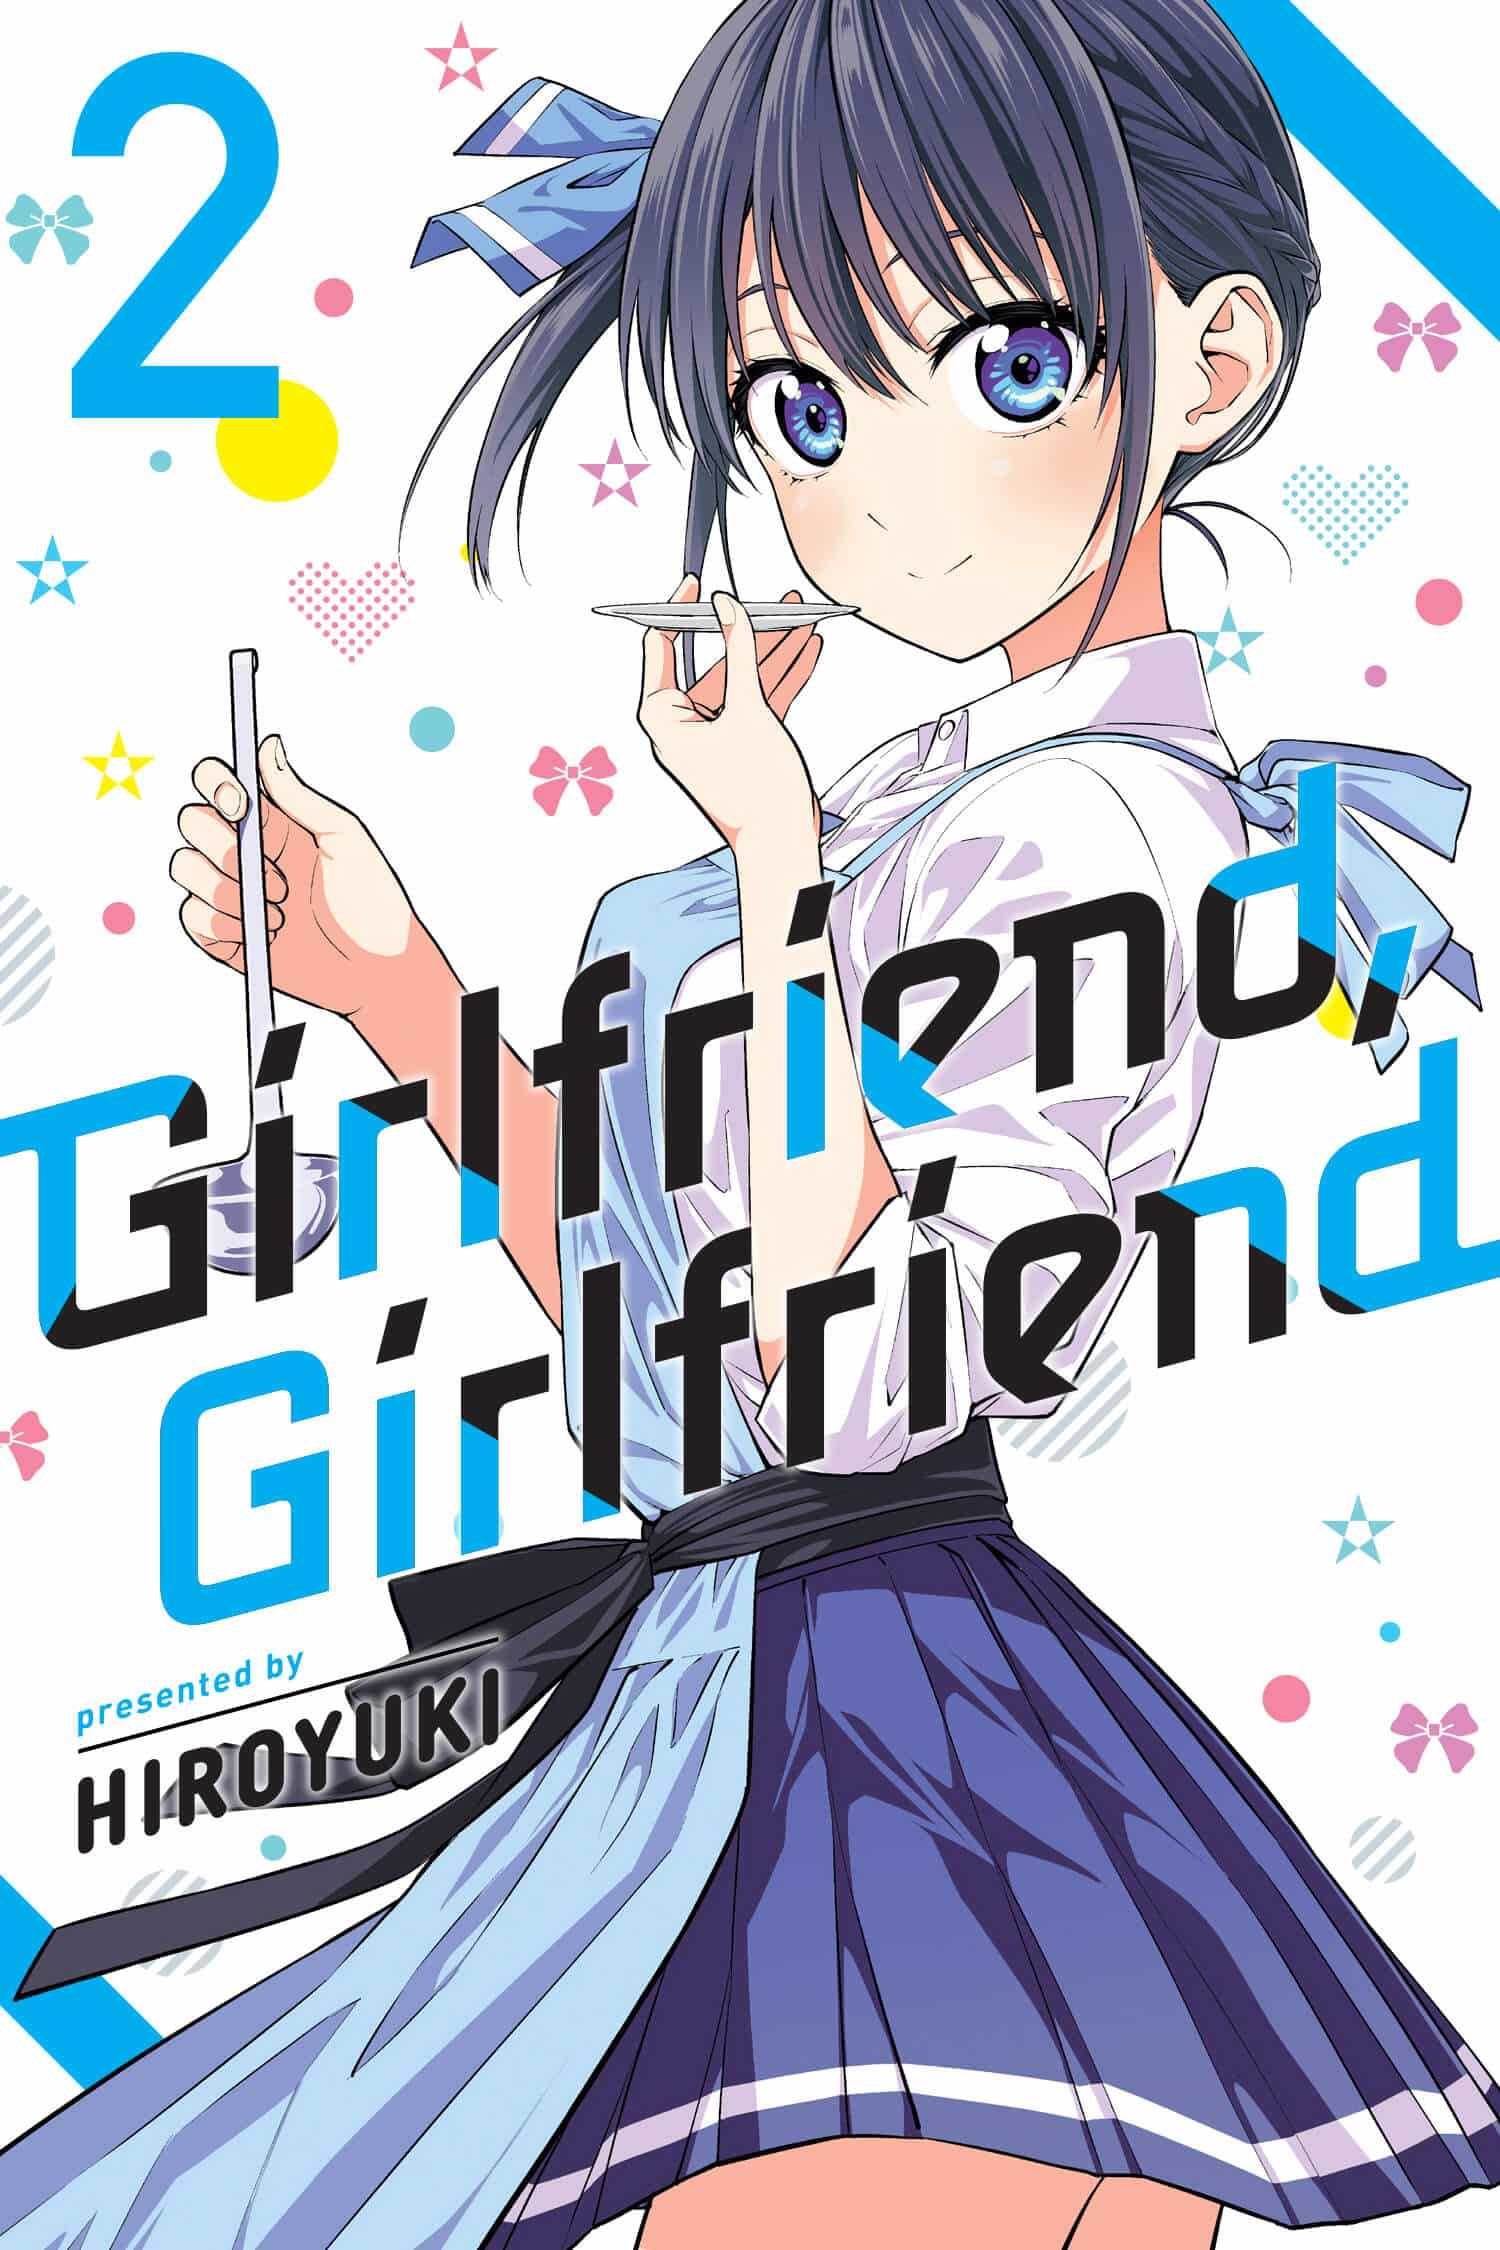 Kanojo mo Kanojo #7 | JAPAN Manga Japanese Comic Book Girlfriend Girlfriend